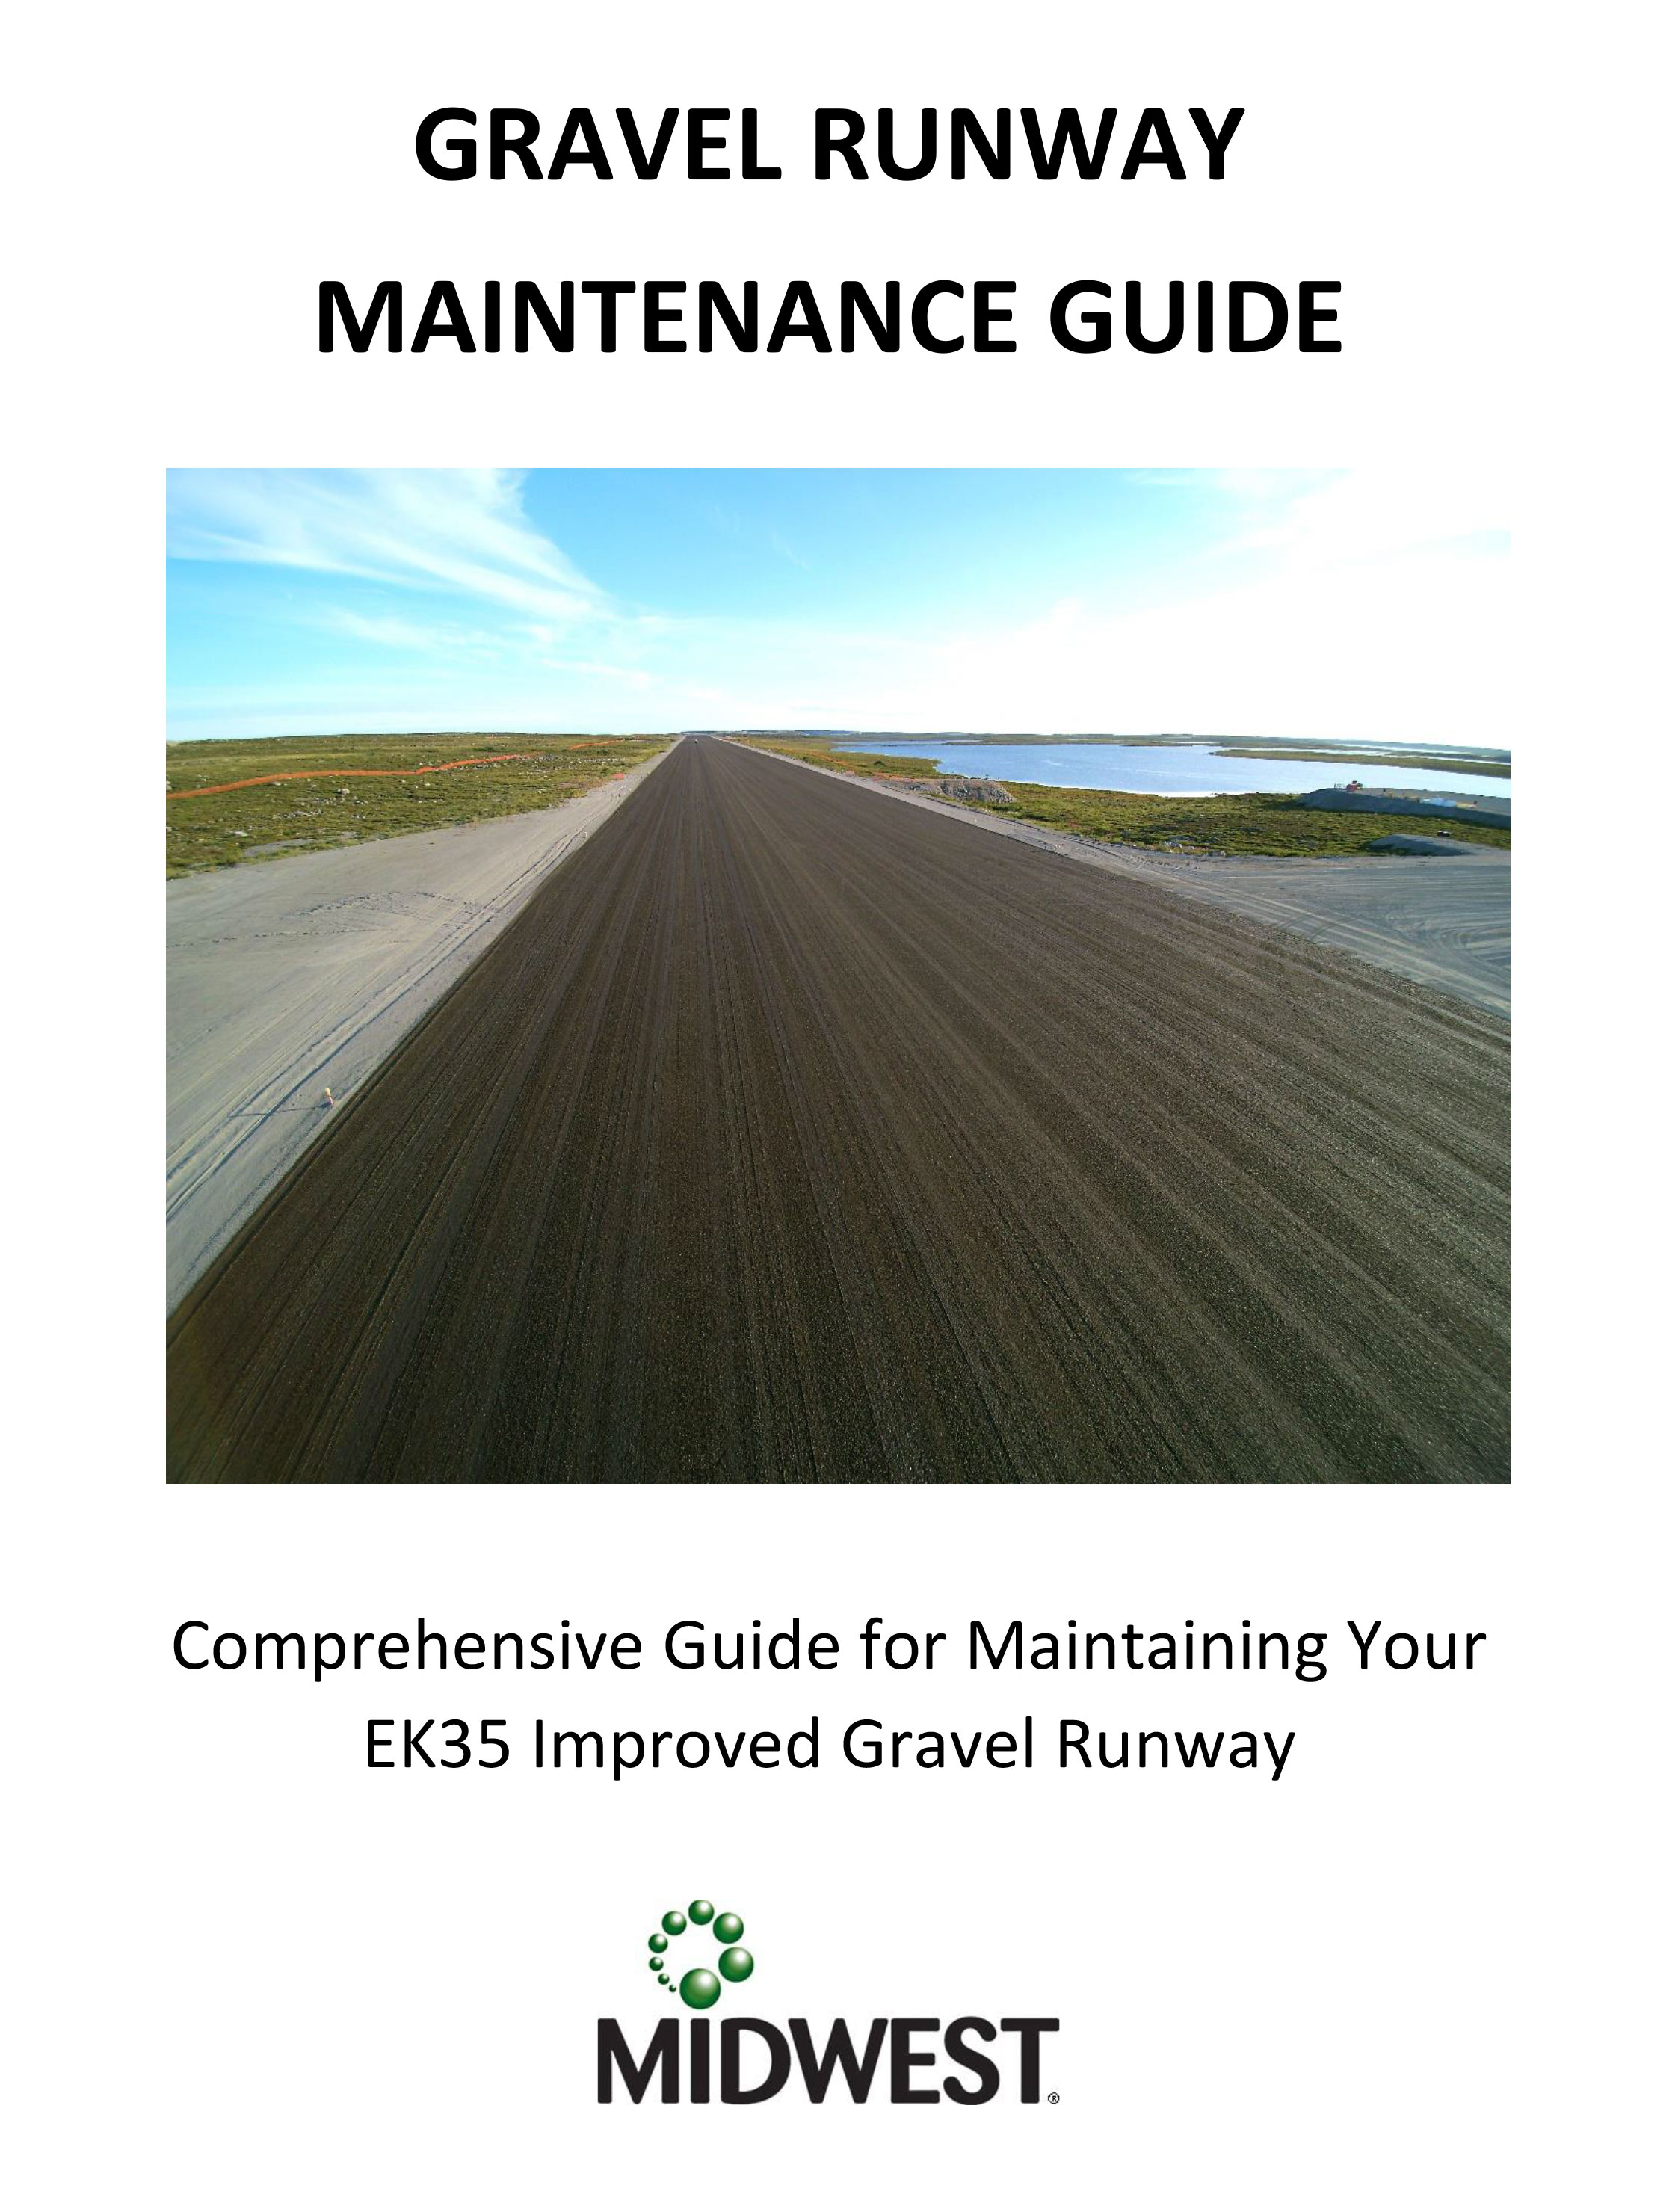 Gravel Runway Maintenance Guide Midwest